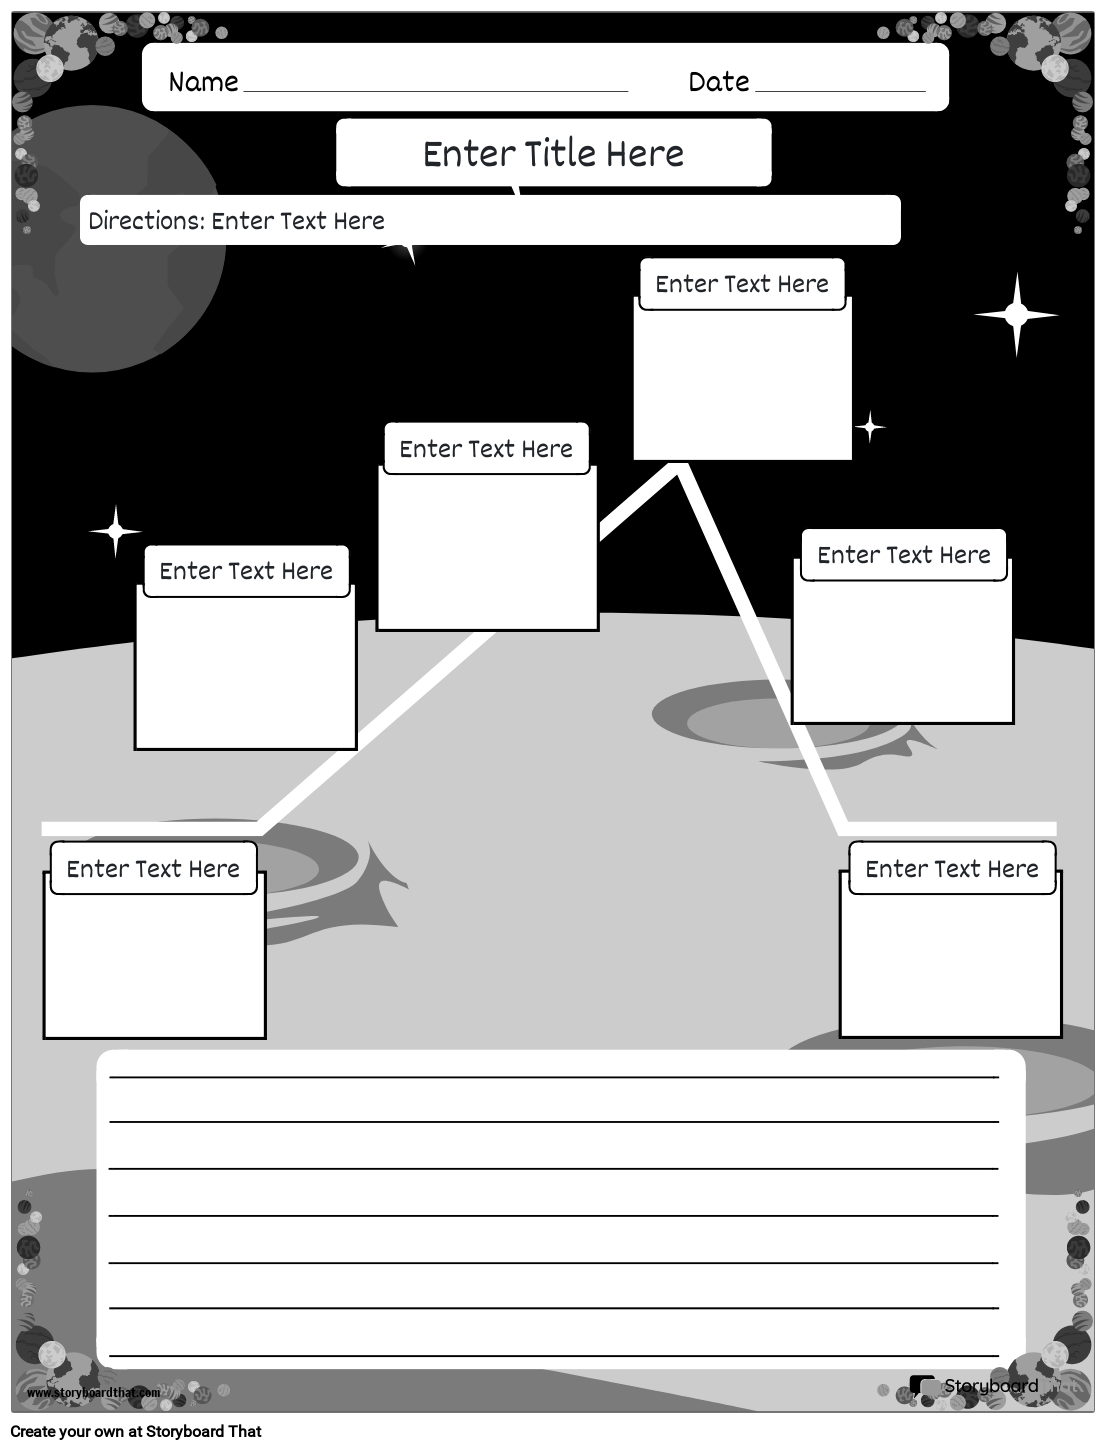 plot-diagram-portrait-bw-1-storyboard-av-no-examples